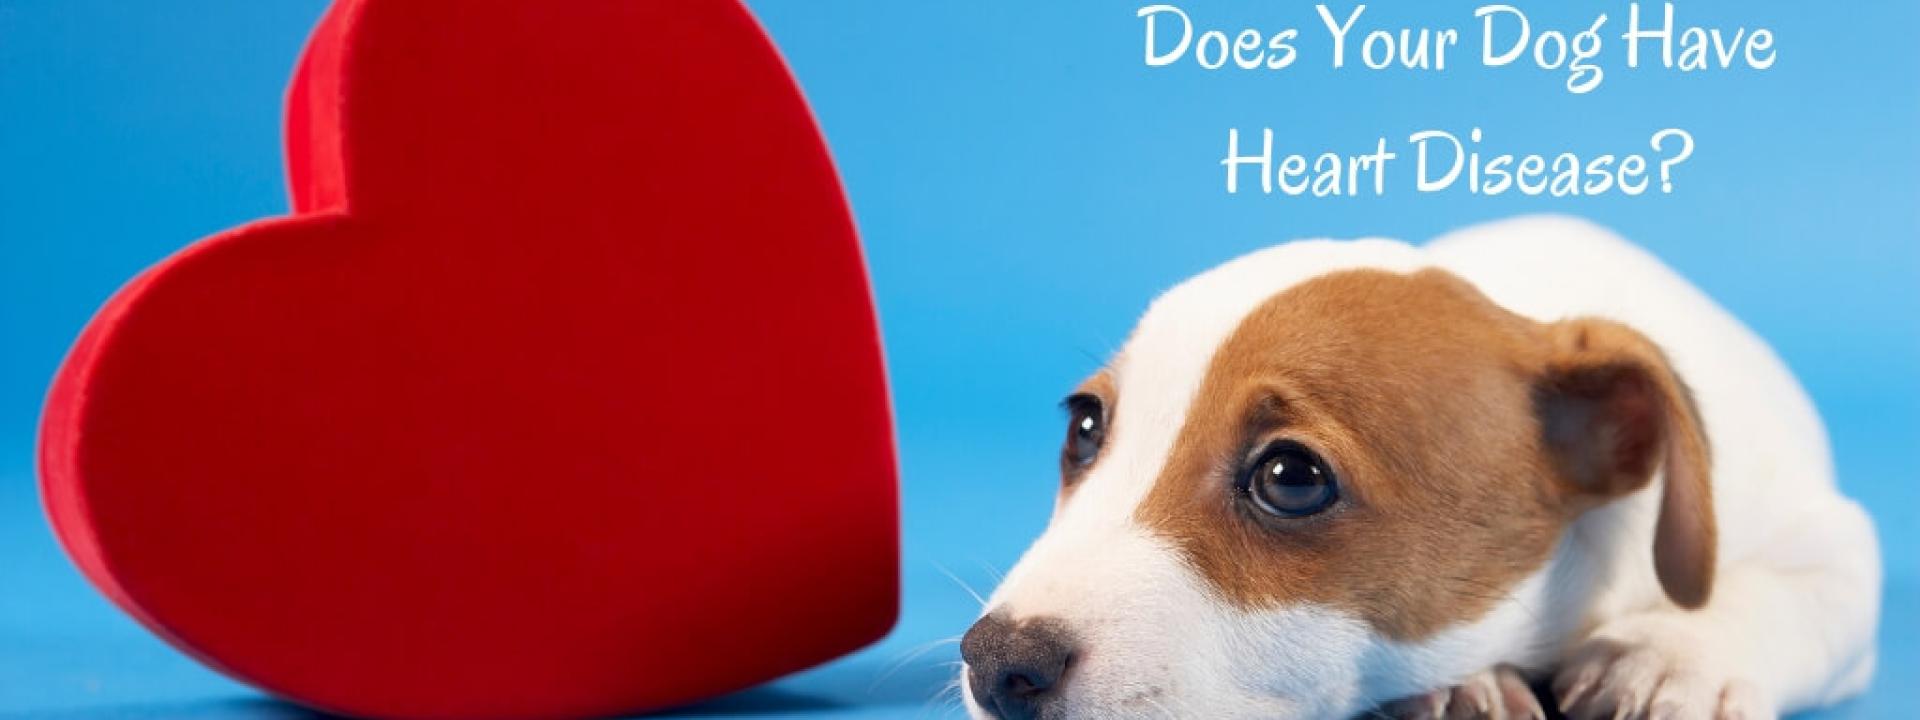 does-your-dog-heart-disease-blog-header.jpg